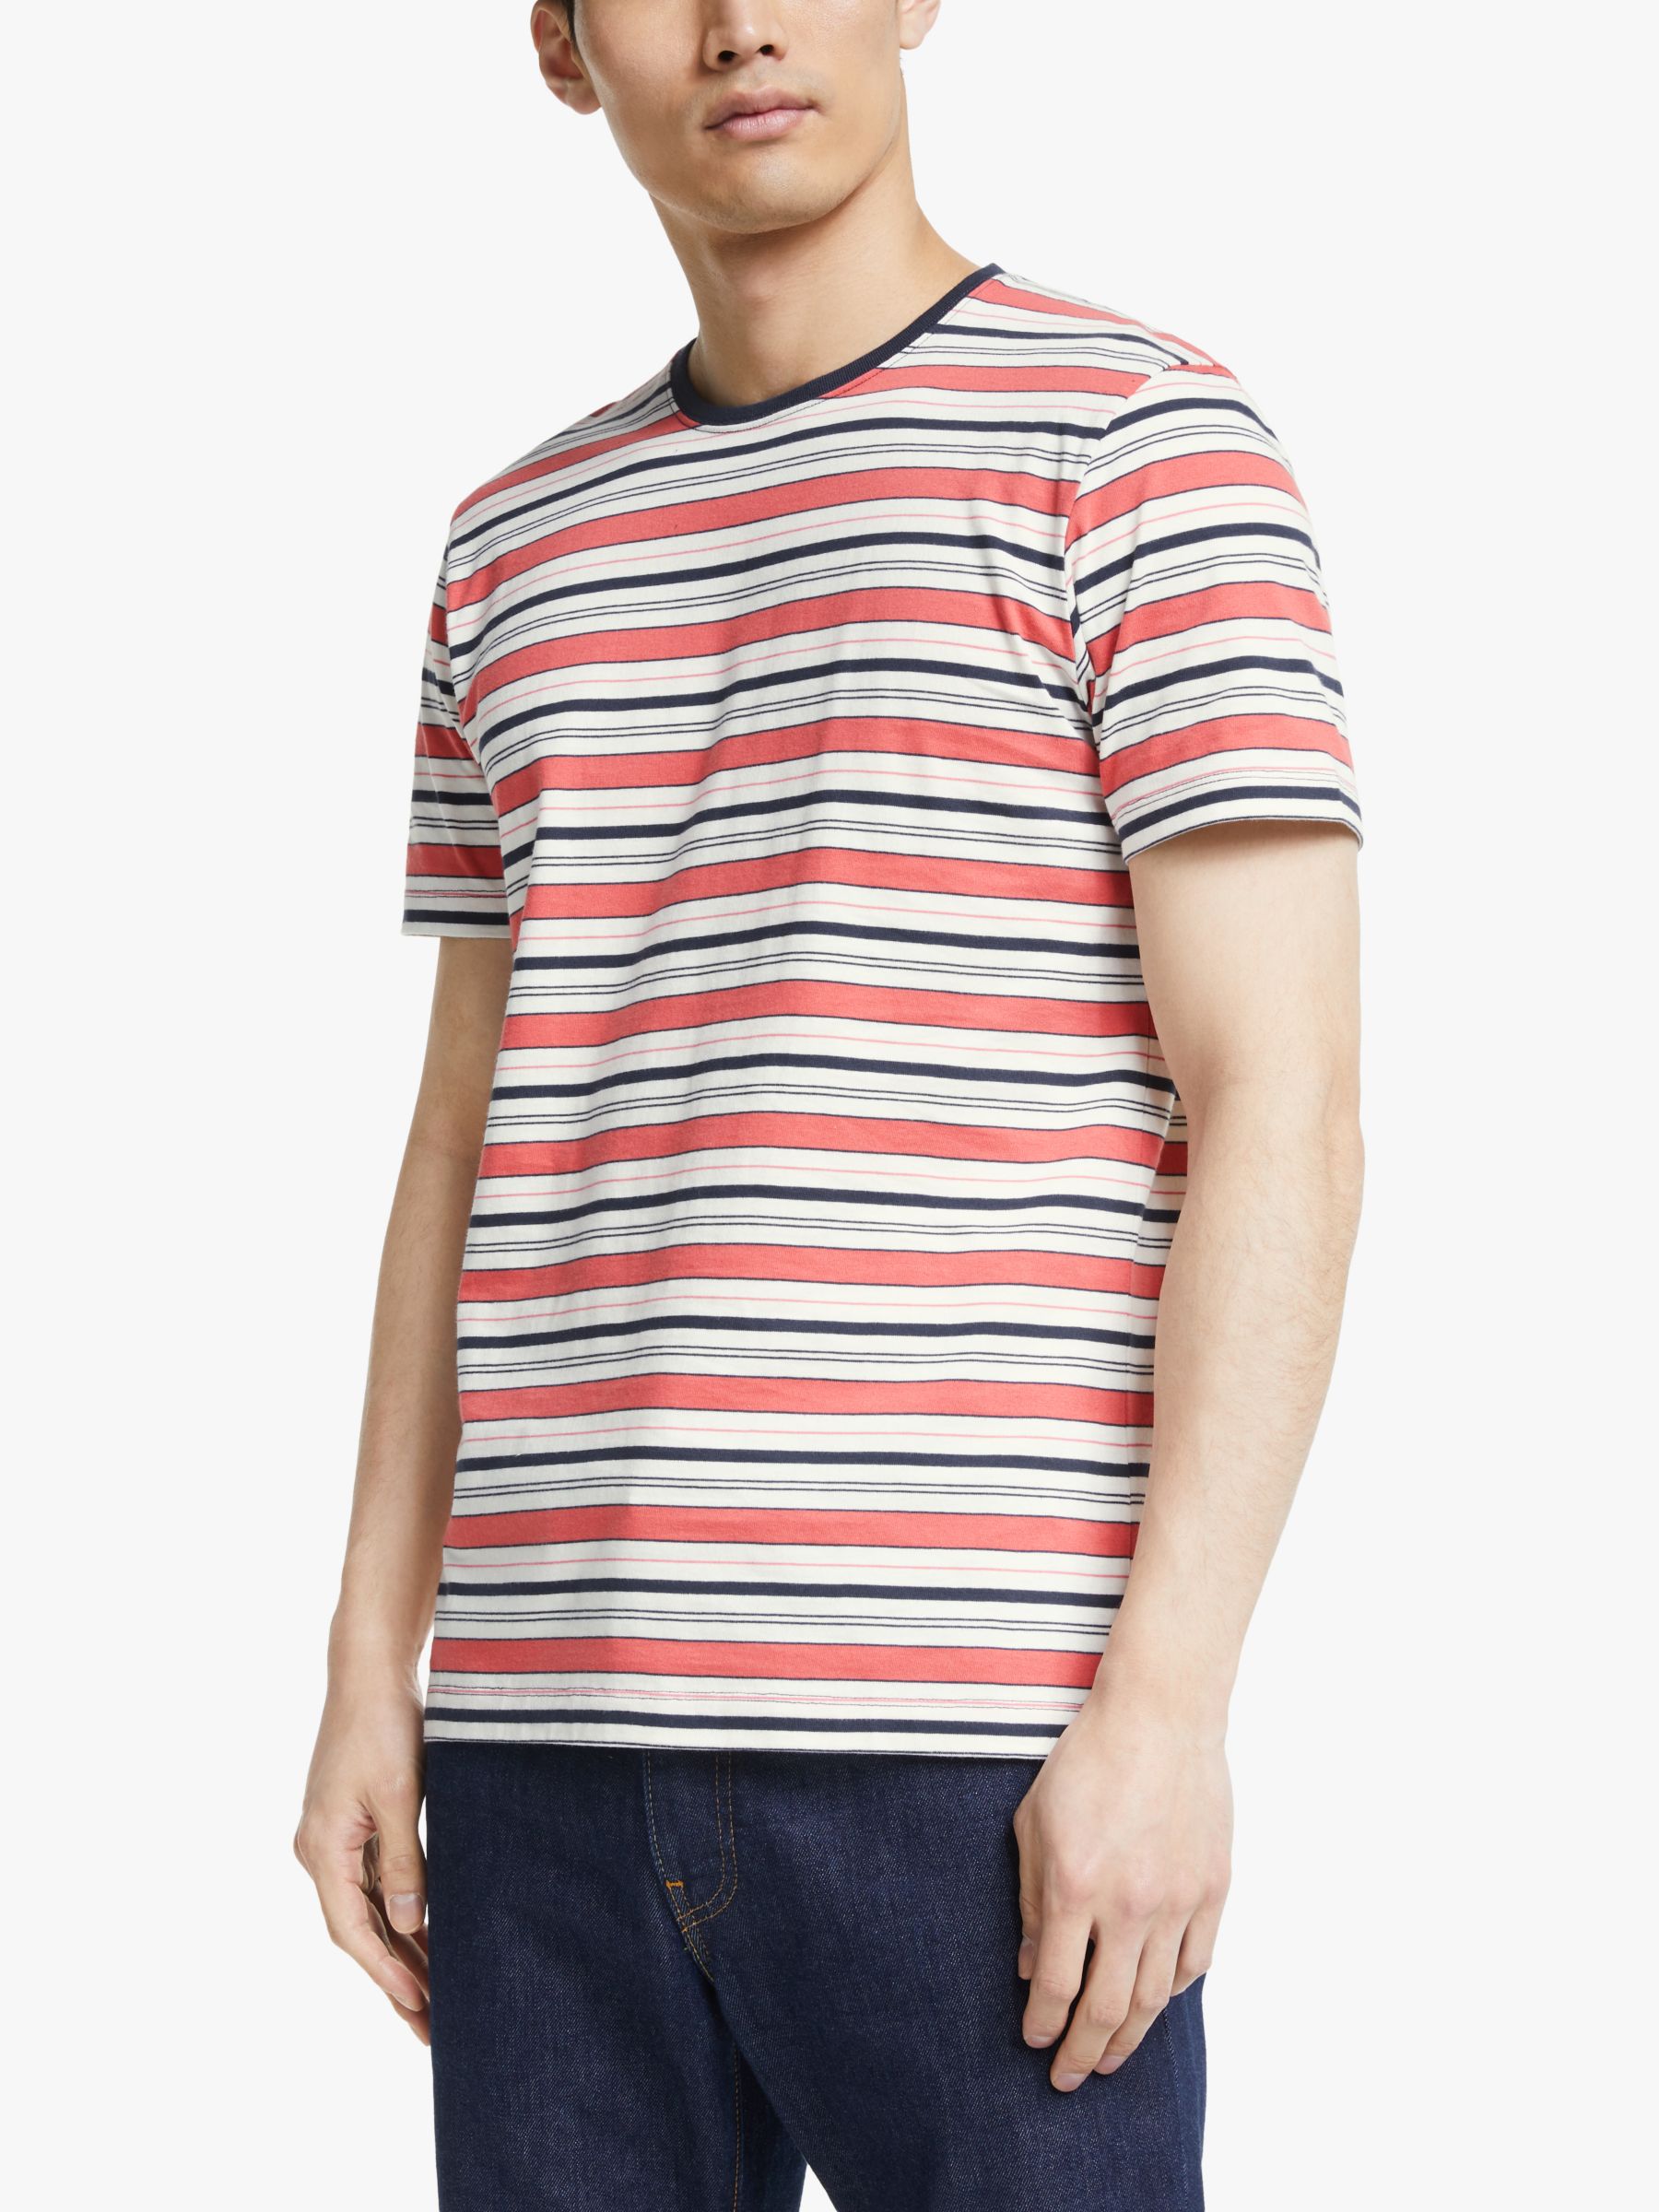 John Lewis & Partners Cotton Multi Stripe T-Shirt